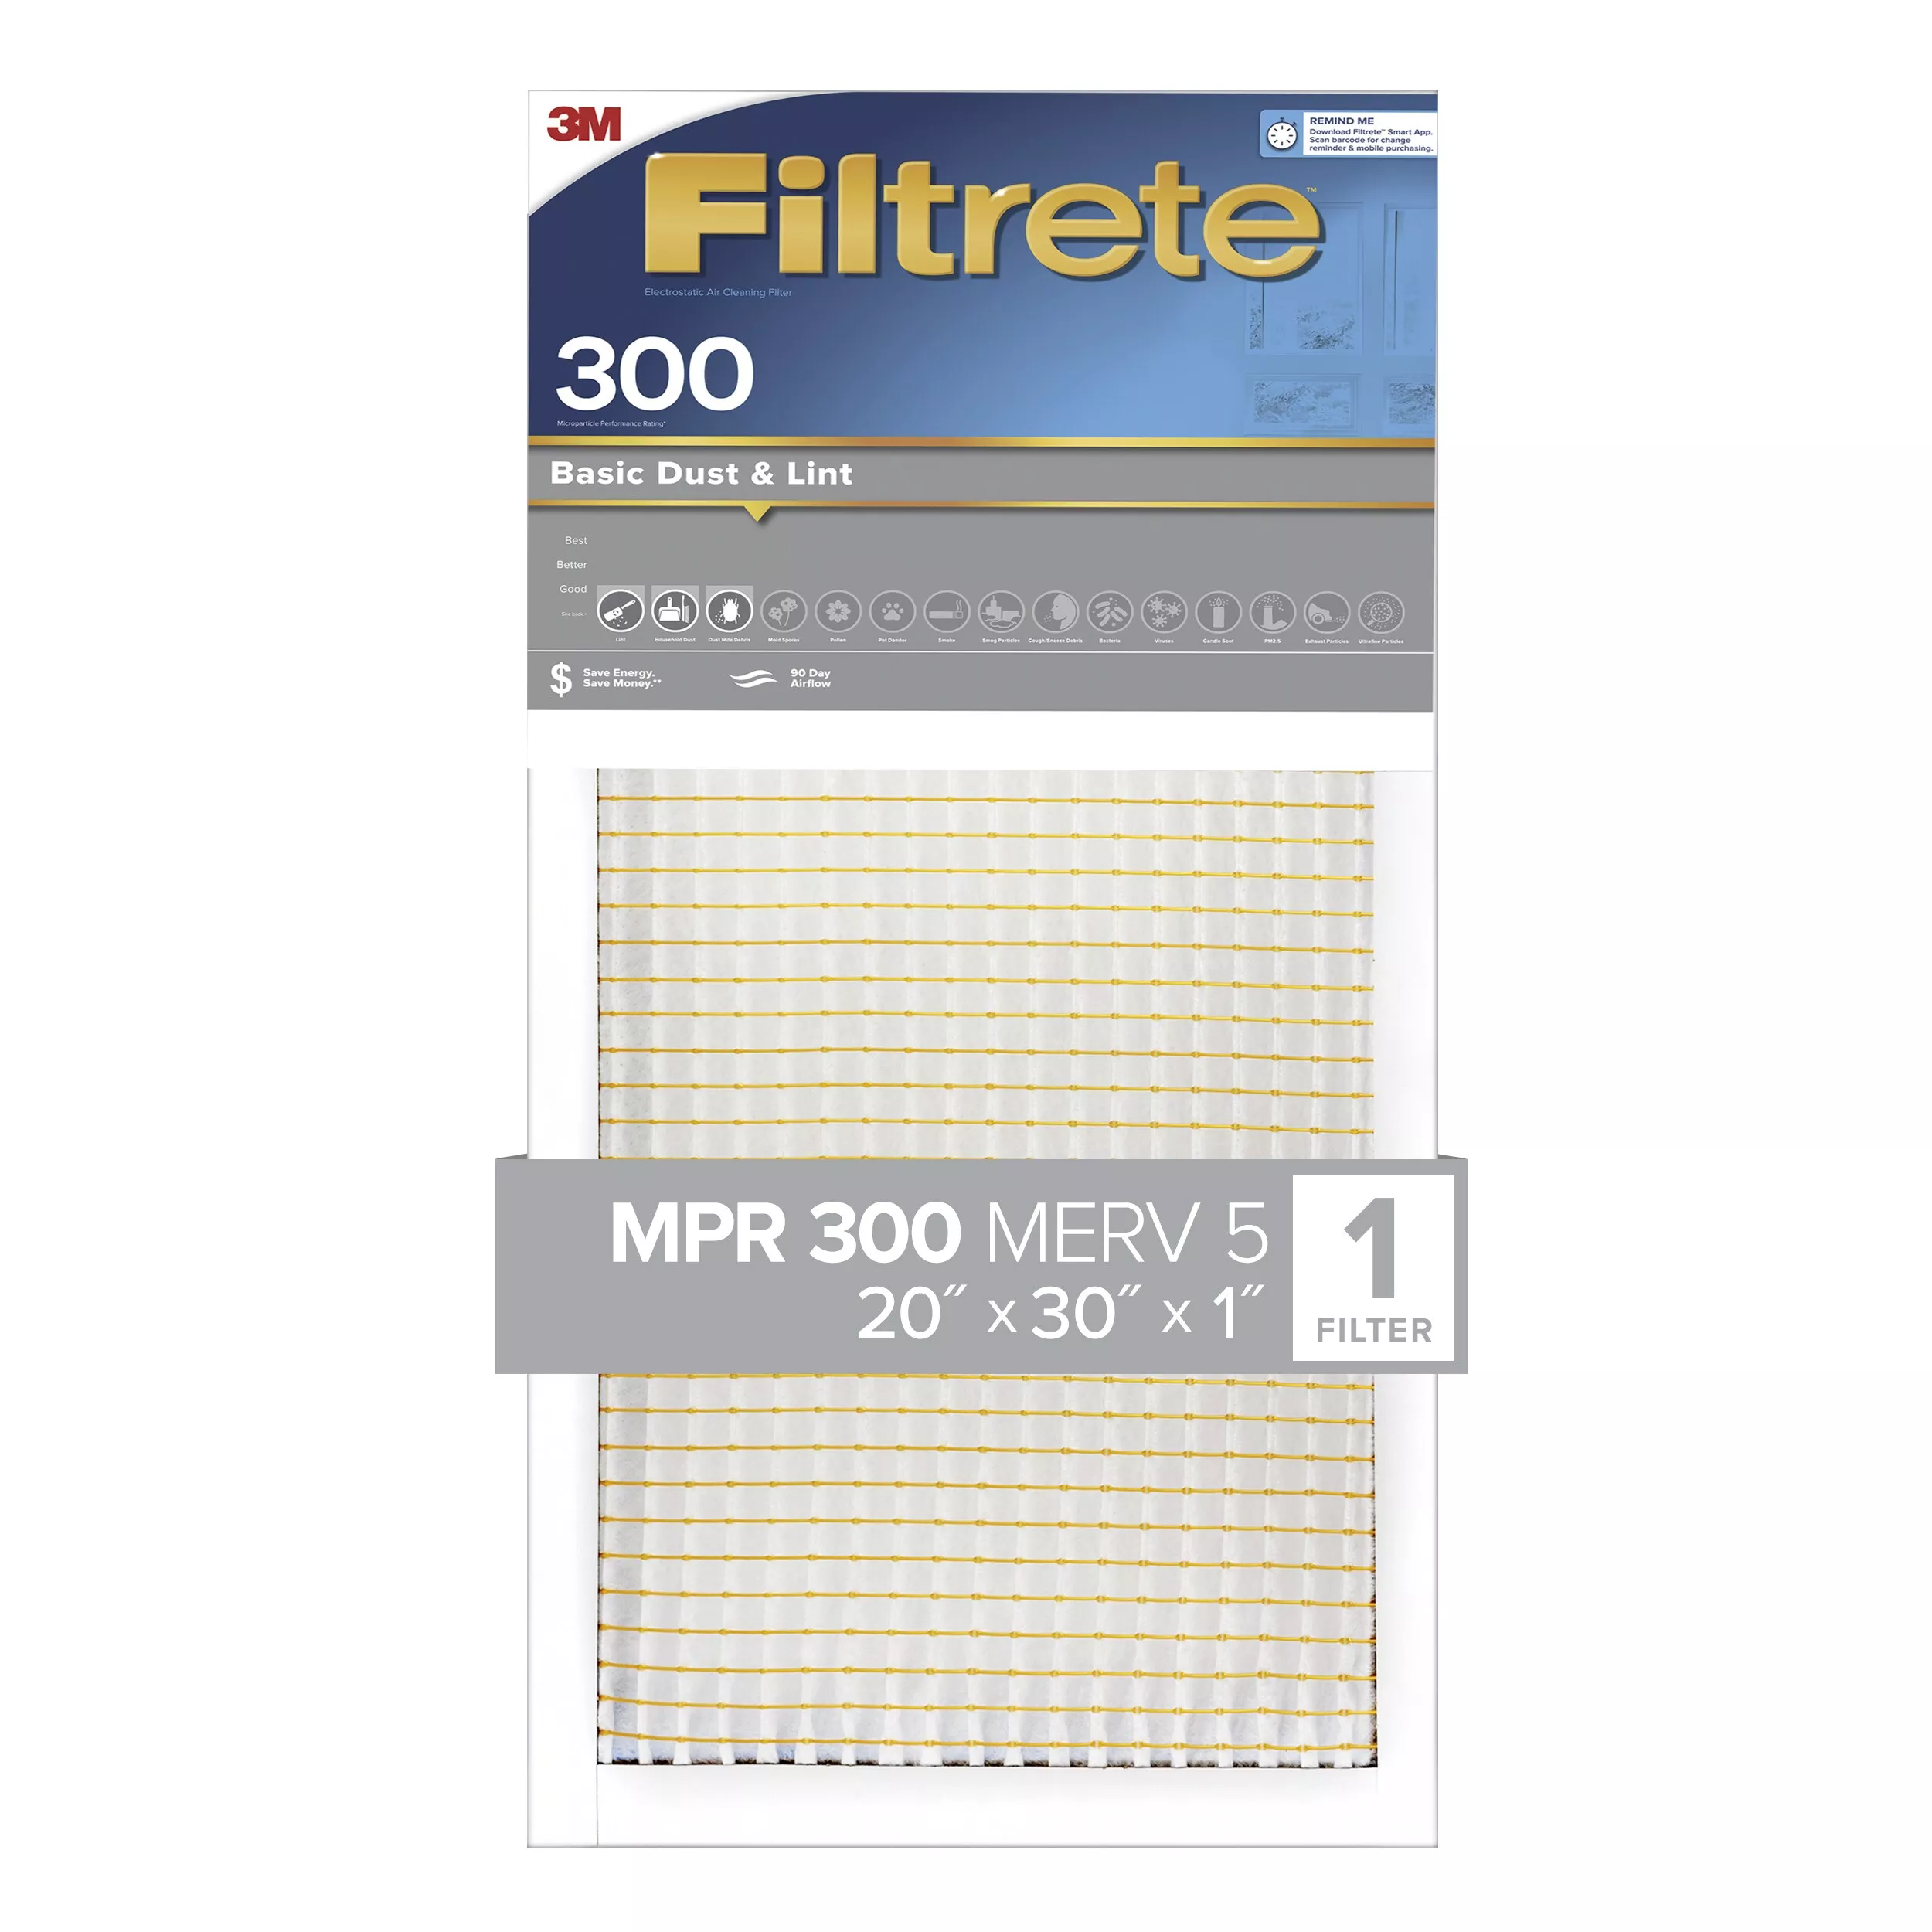 Filtrete™ Basic Dust & Lint Air Filter, 300 MPR, 322-4, 20 in x 30 in x
1 in (50.8 cm x 76.2 cm x 2.5 cm)